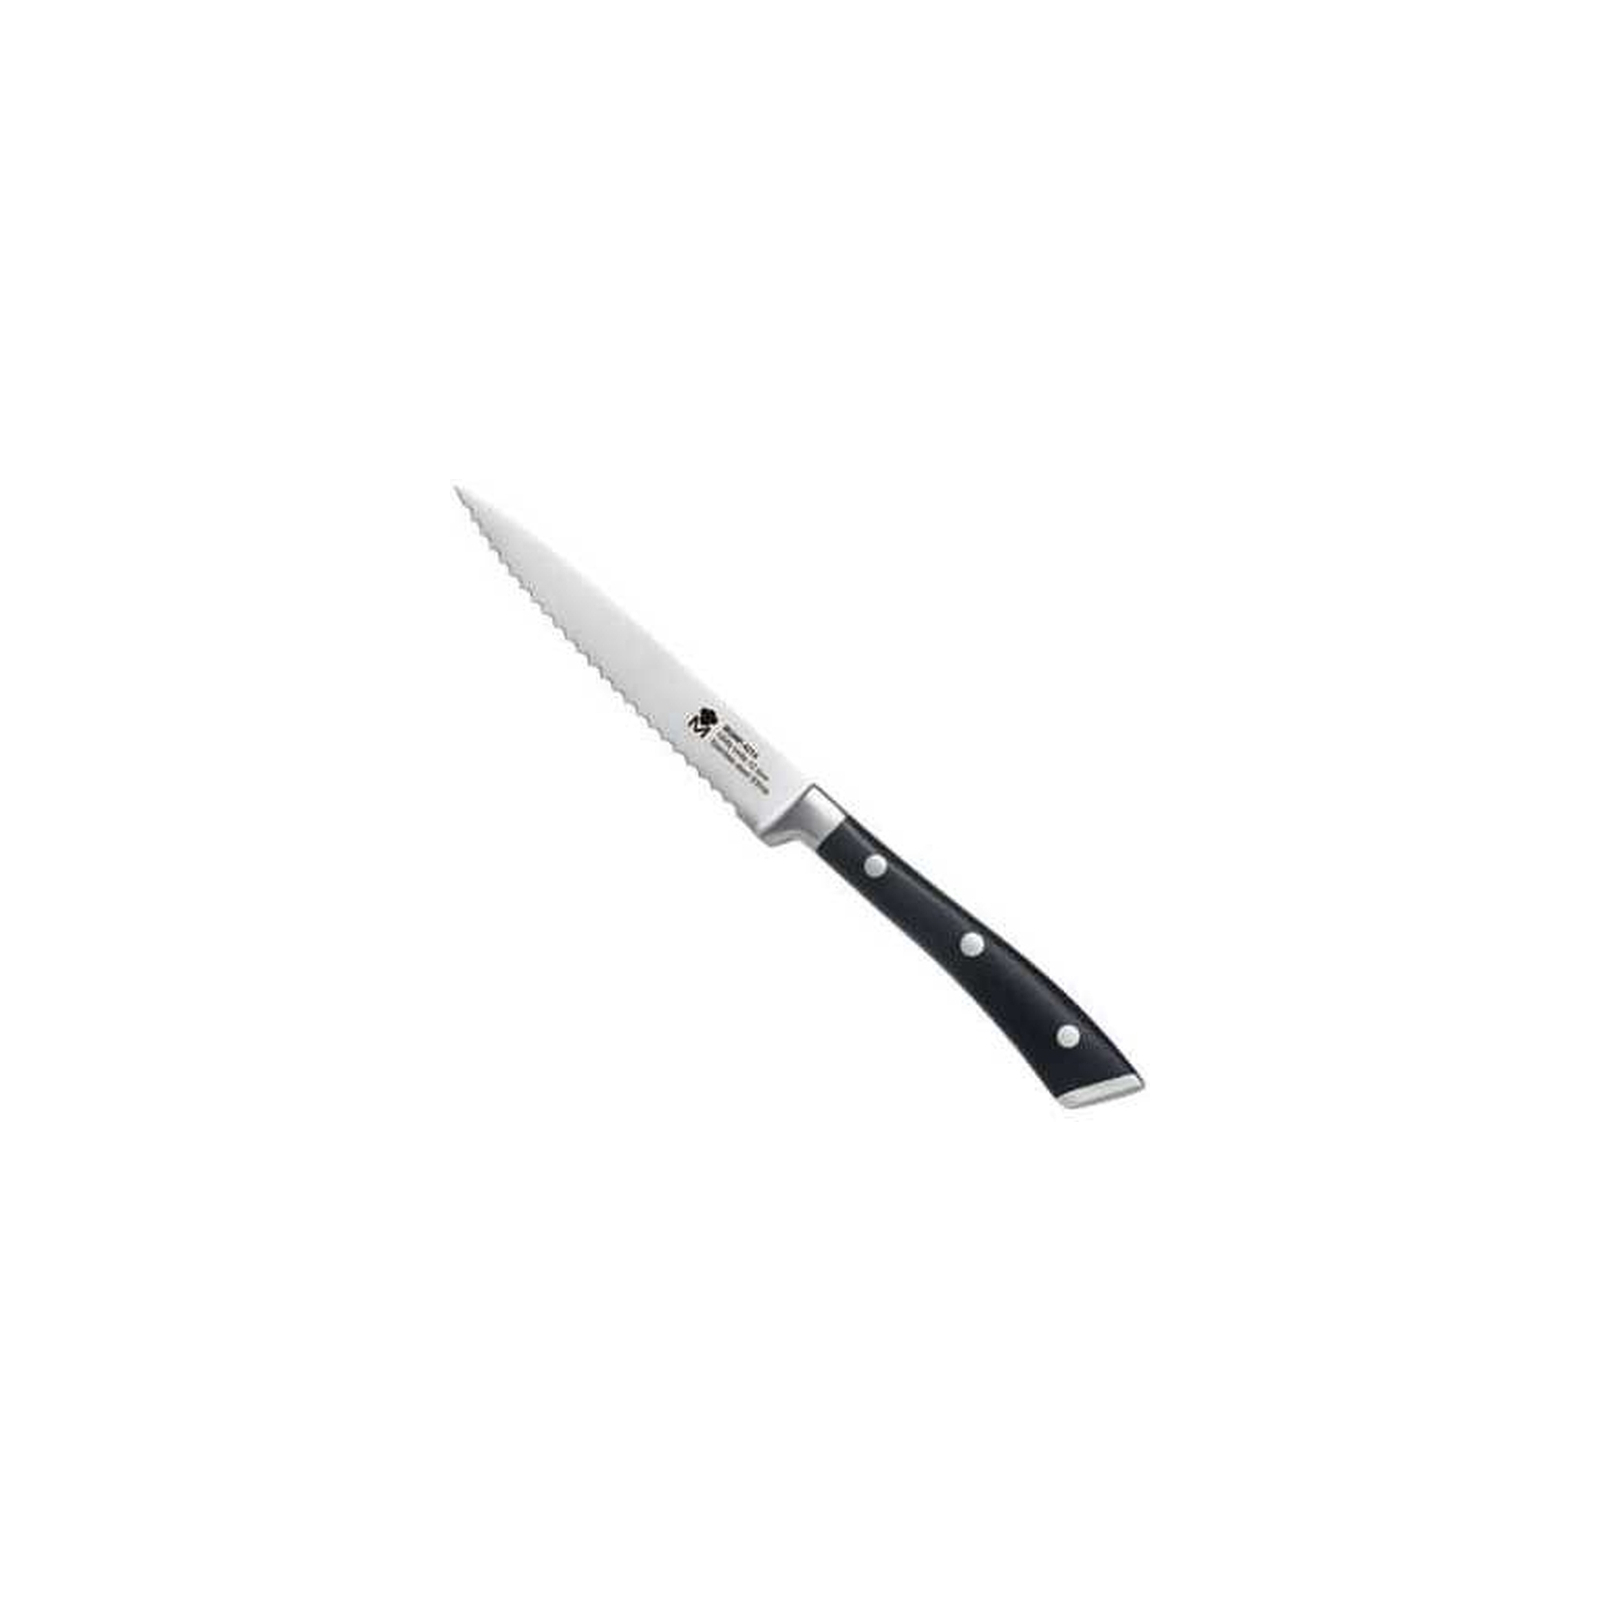 Кухонный нож MasterPro Foodies Collection універсальний 12.5 см (BGMP-4314)